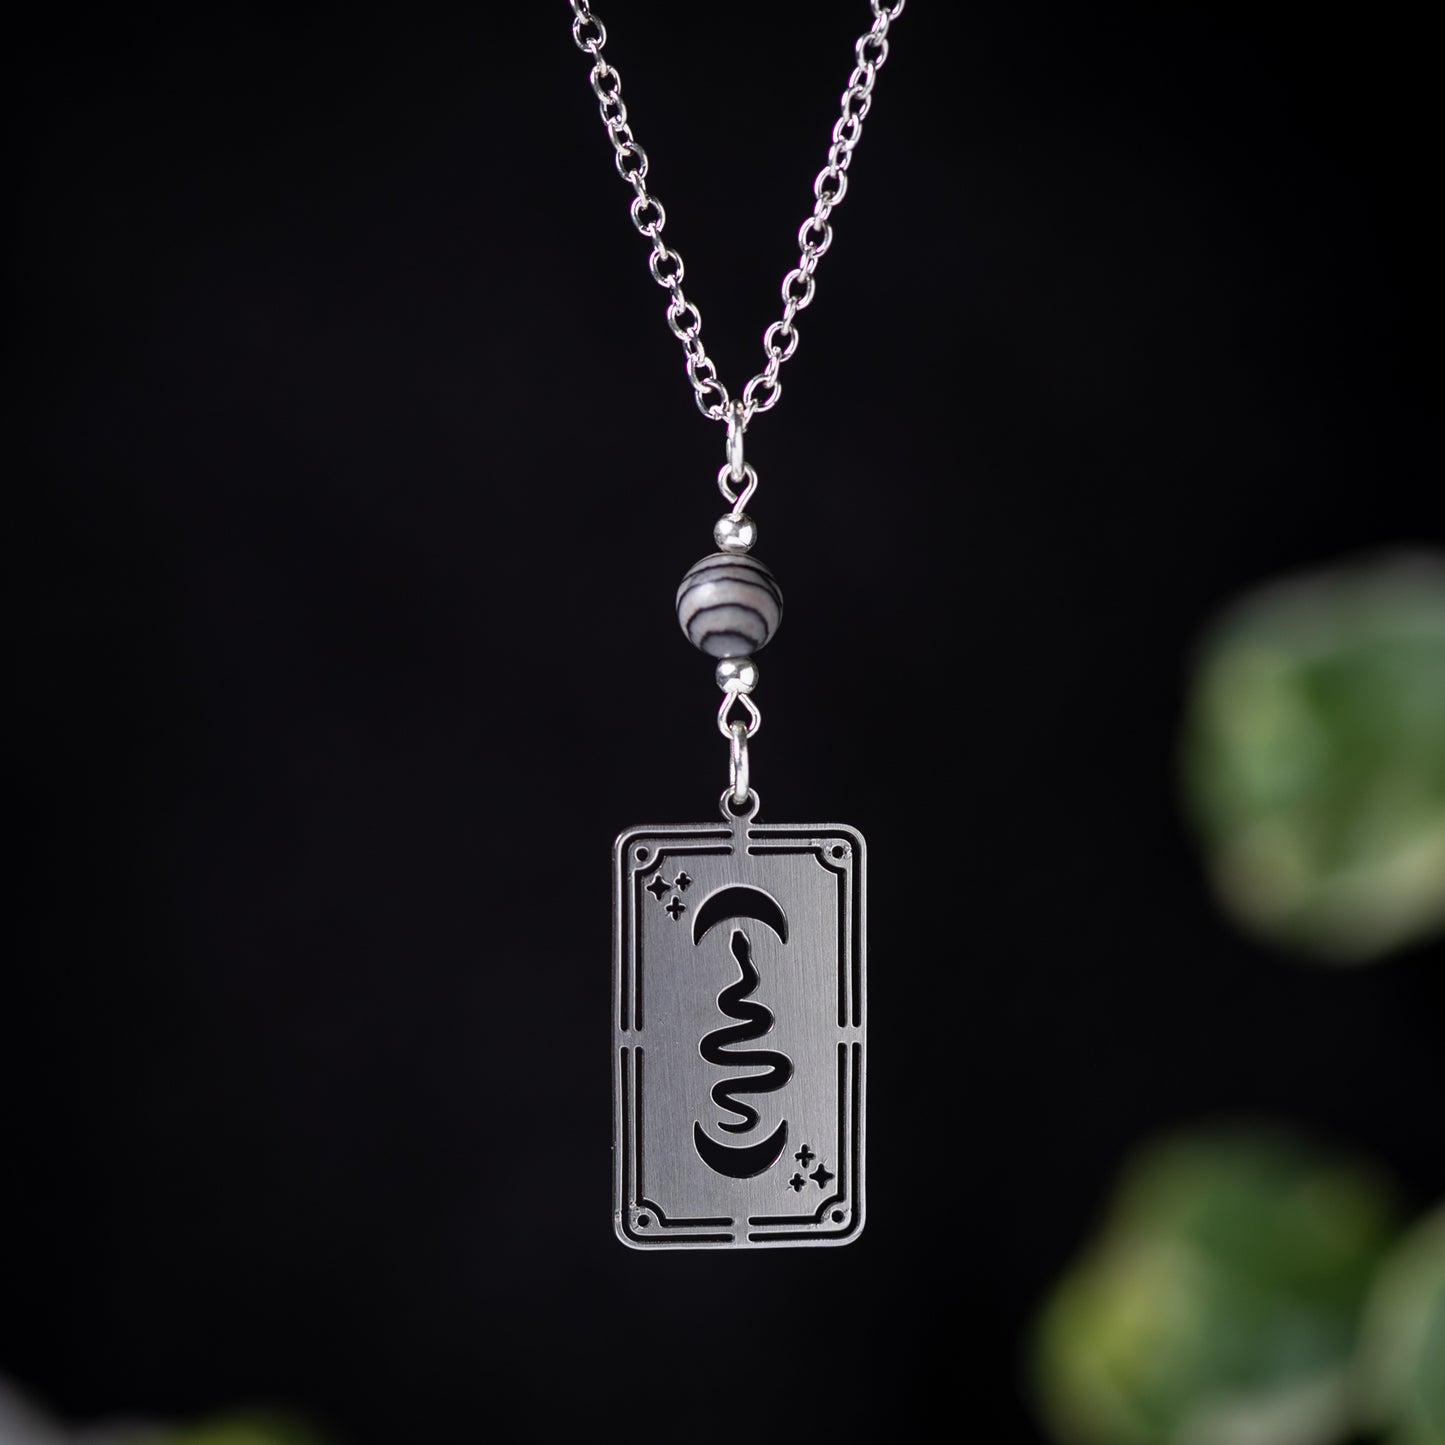 Luna Serpent Tarot Card Necklace